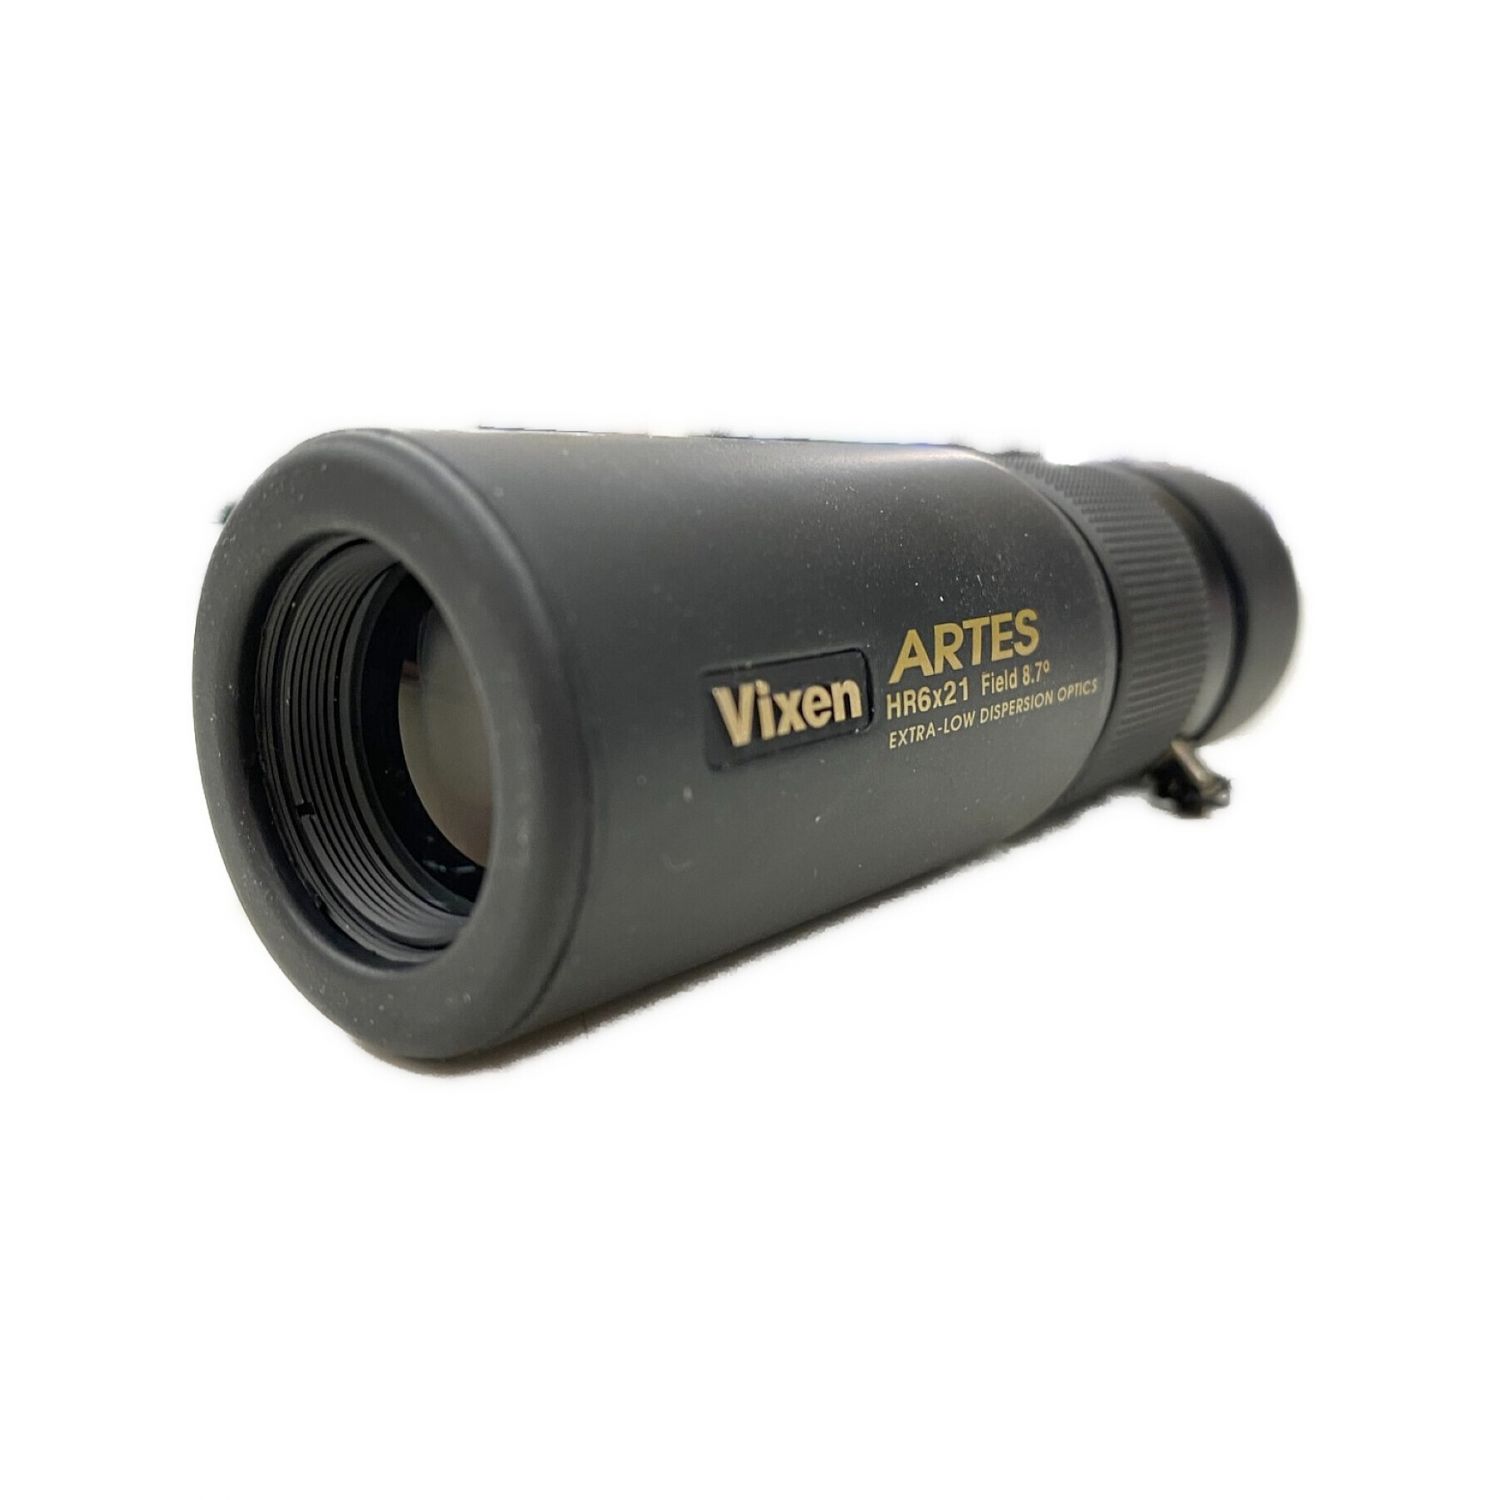 VIXEN (ビクセン) 単眼鏡 アルテスモノキュラー HR6×21 HR6×21